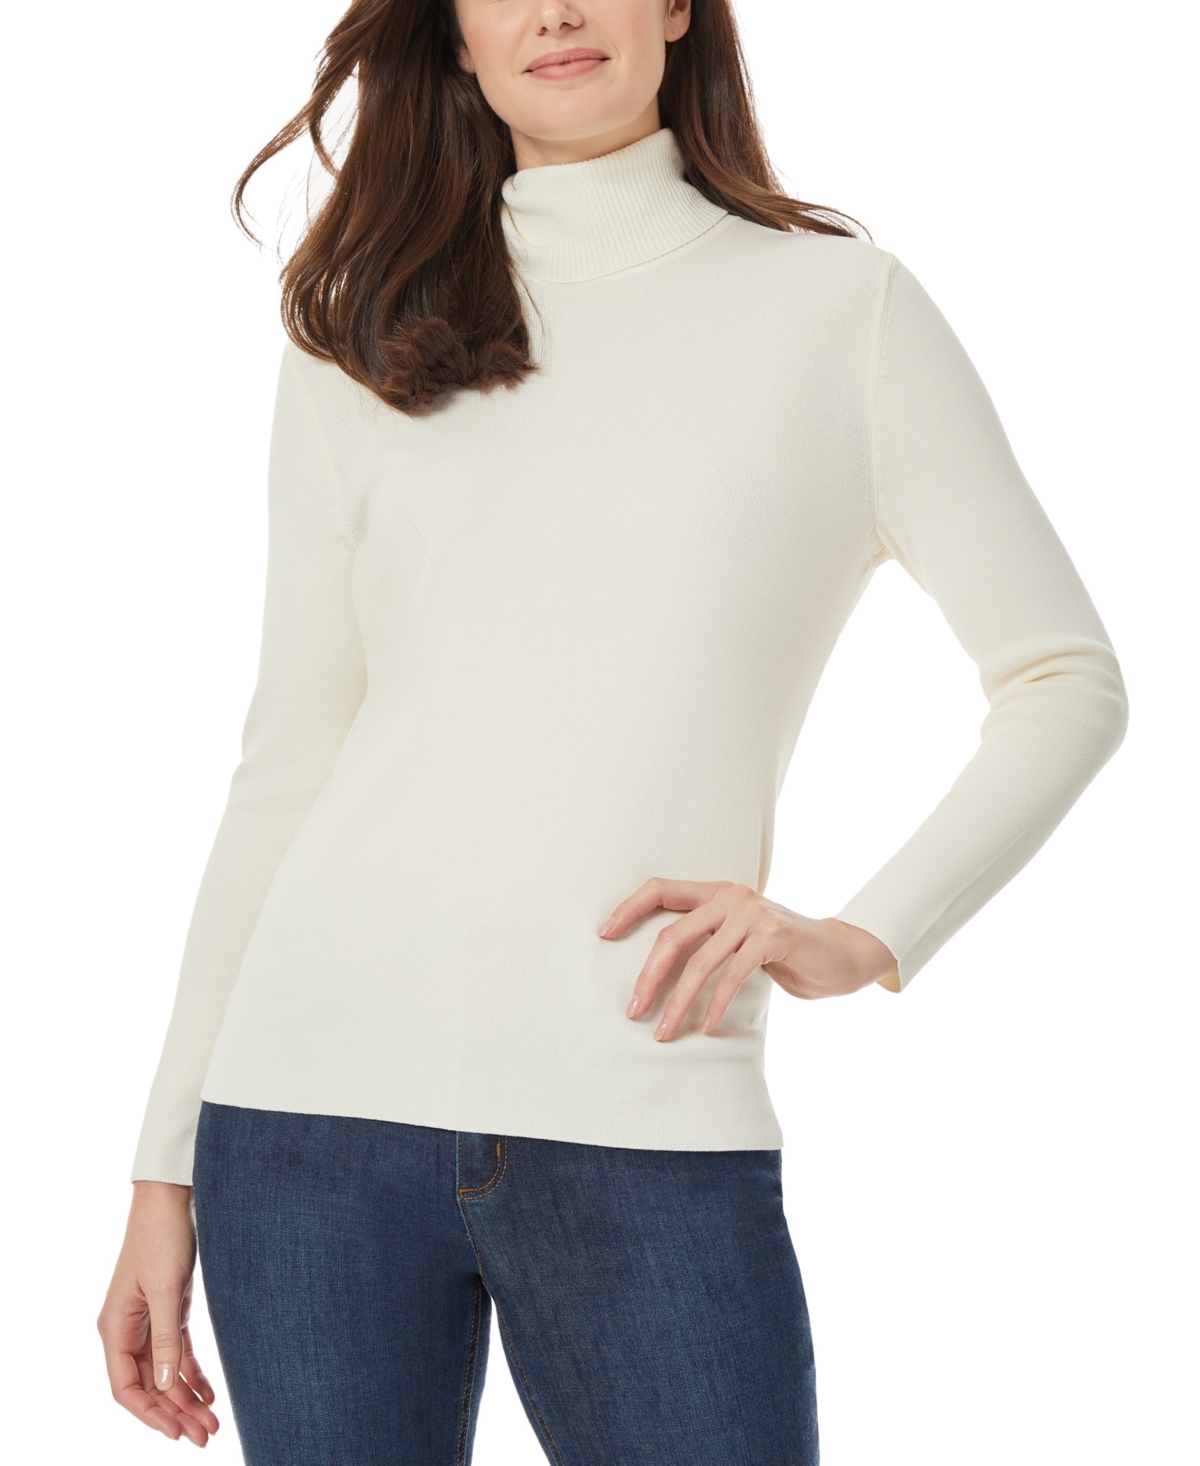 Jones New York Women's Long Sleeve Turtleneck Sweater